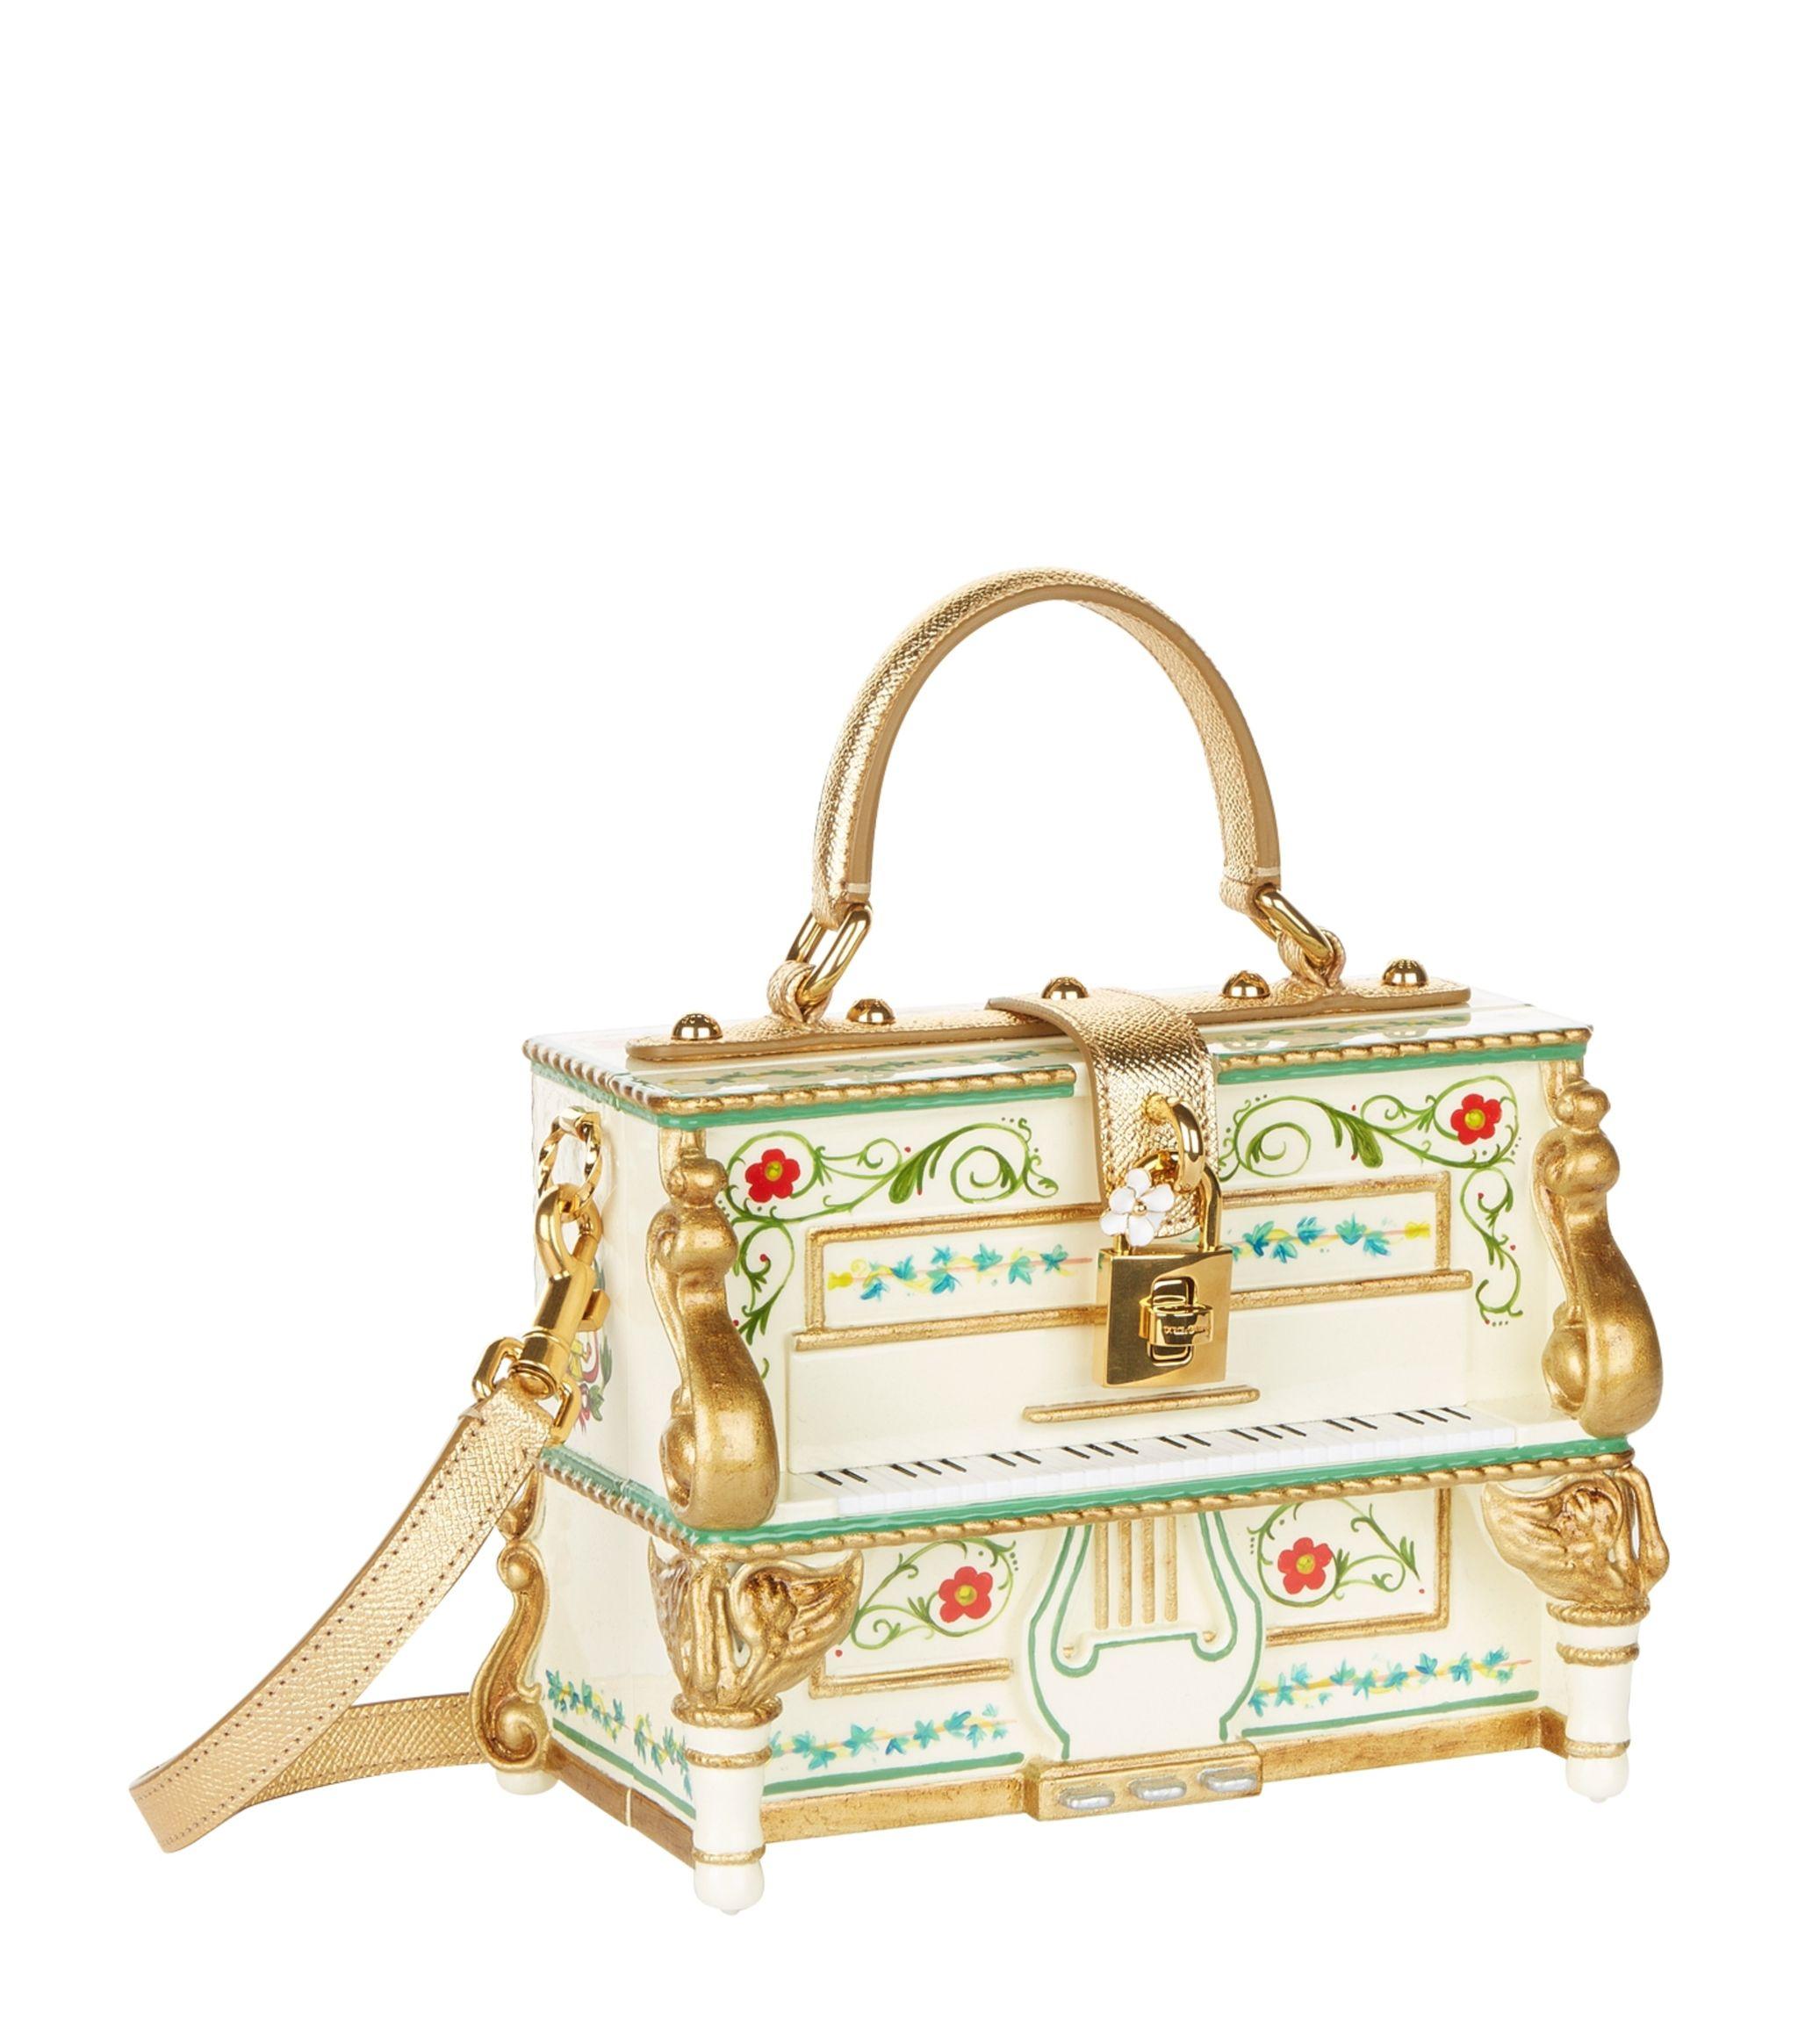 Dolce & Gabbana Dolce Box Piano Bag in Metallic - Lyst